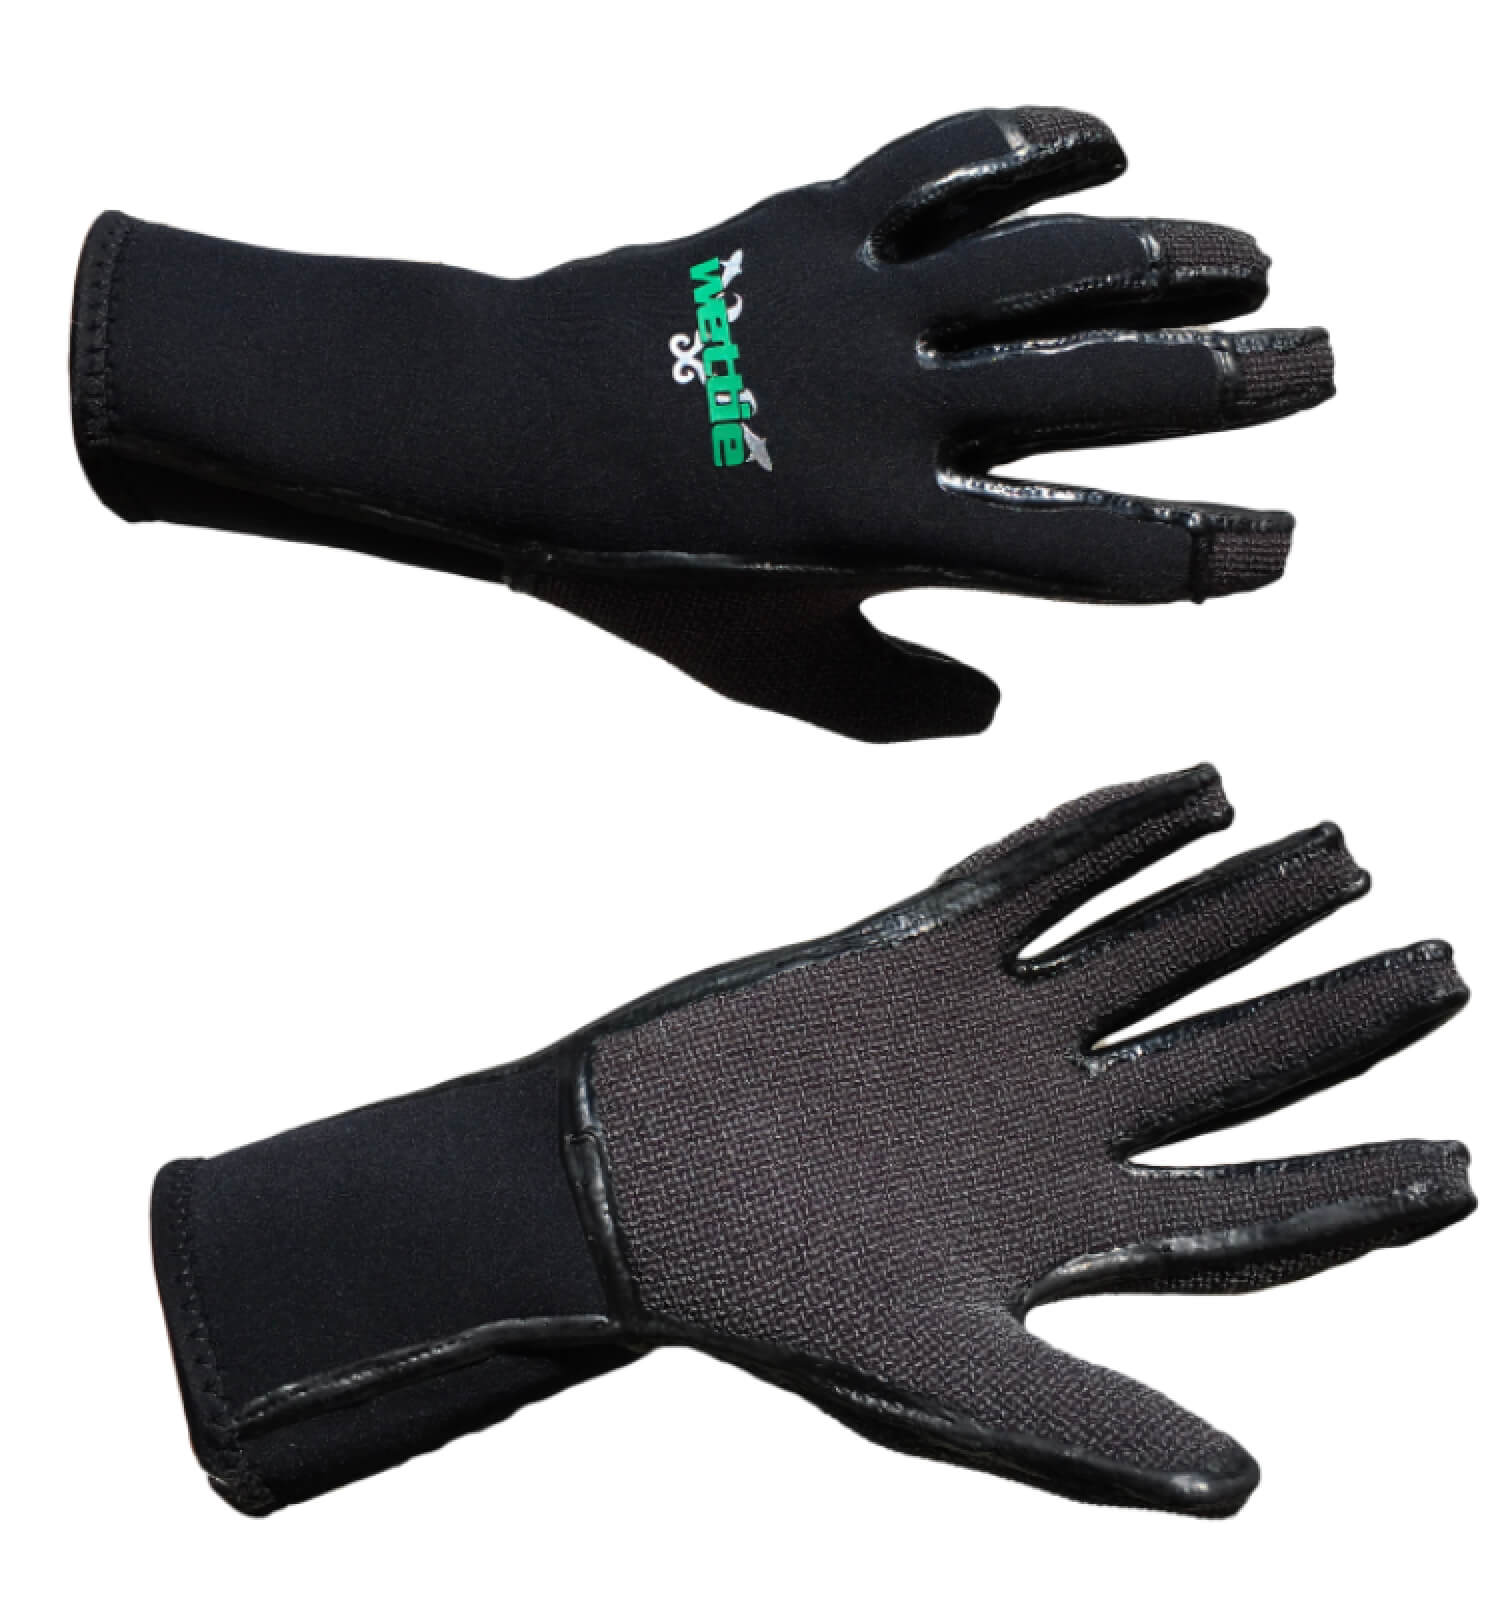 Super stretch kevlar gloves - Wettie dive gloves - EFK Fish Dive Spear